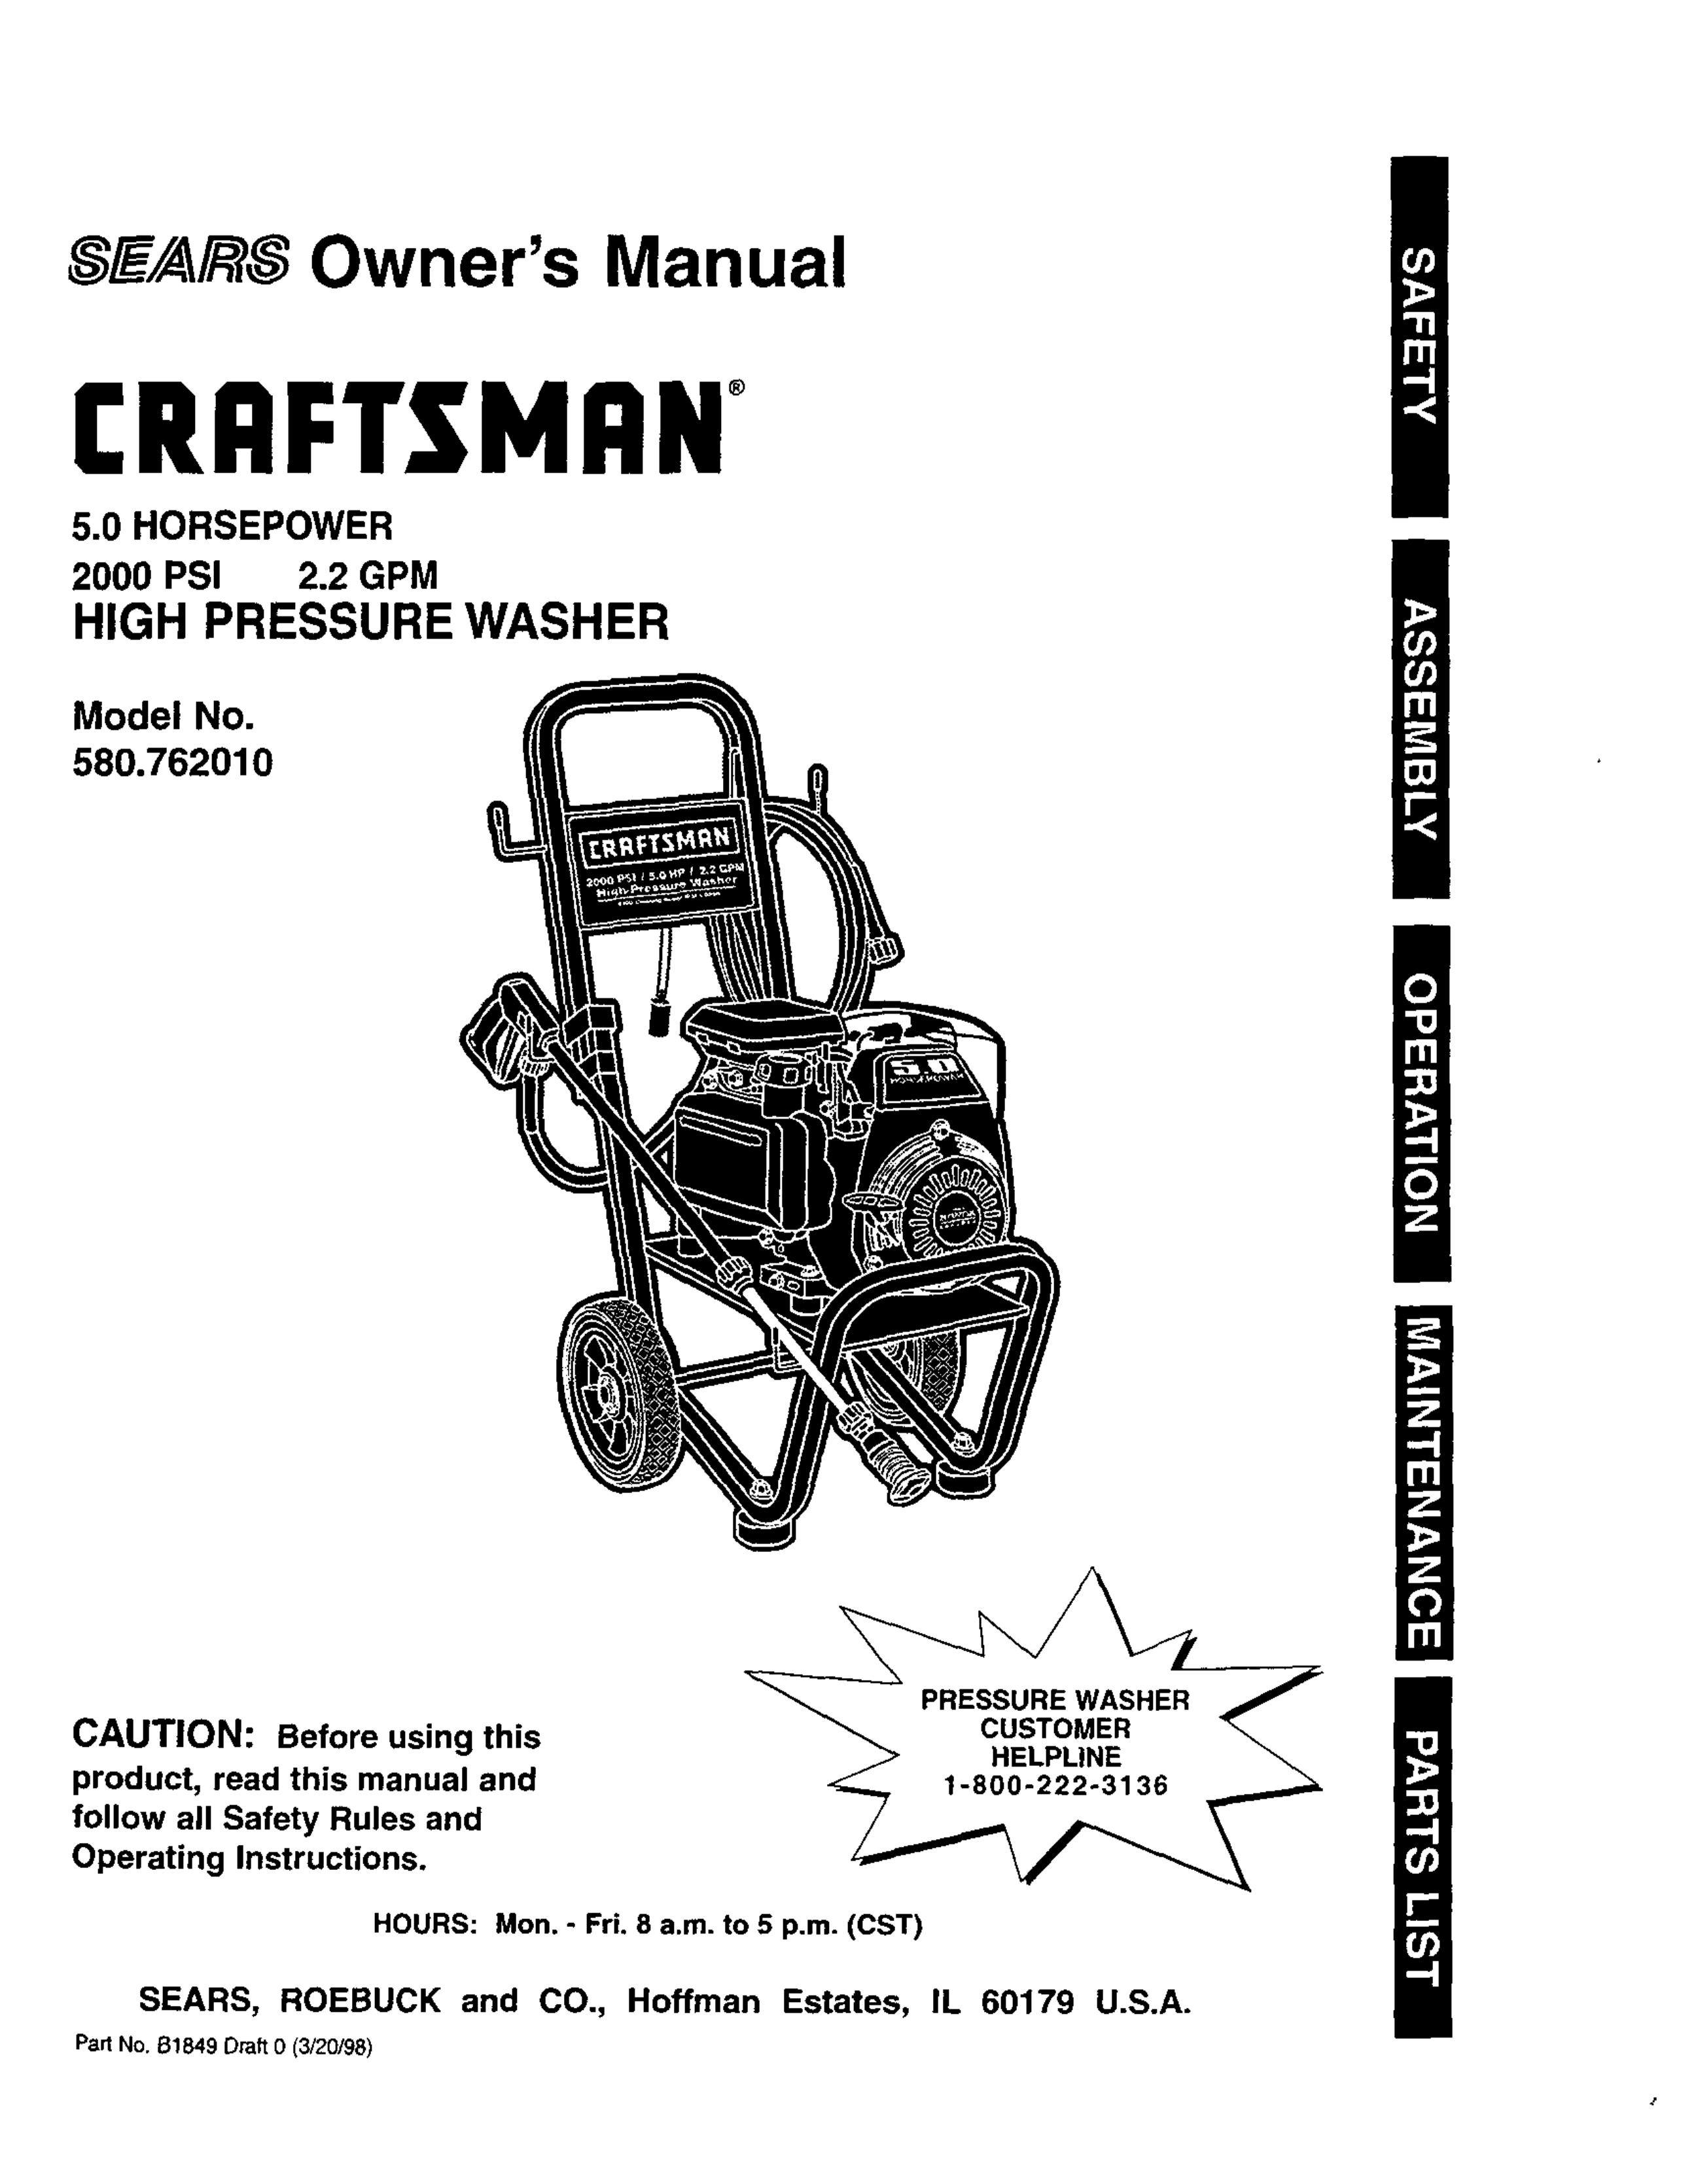 Craftsman 580.76201 Pressure Washer User Manual